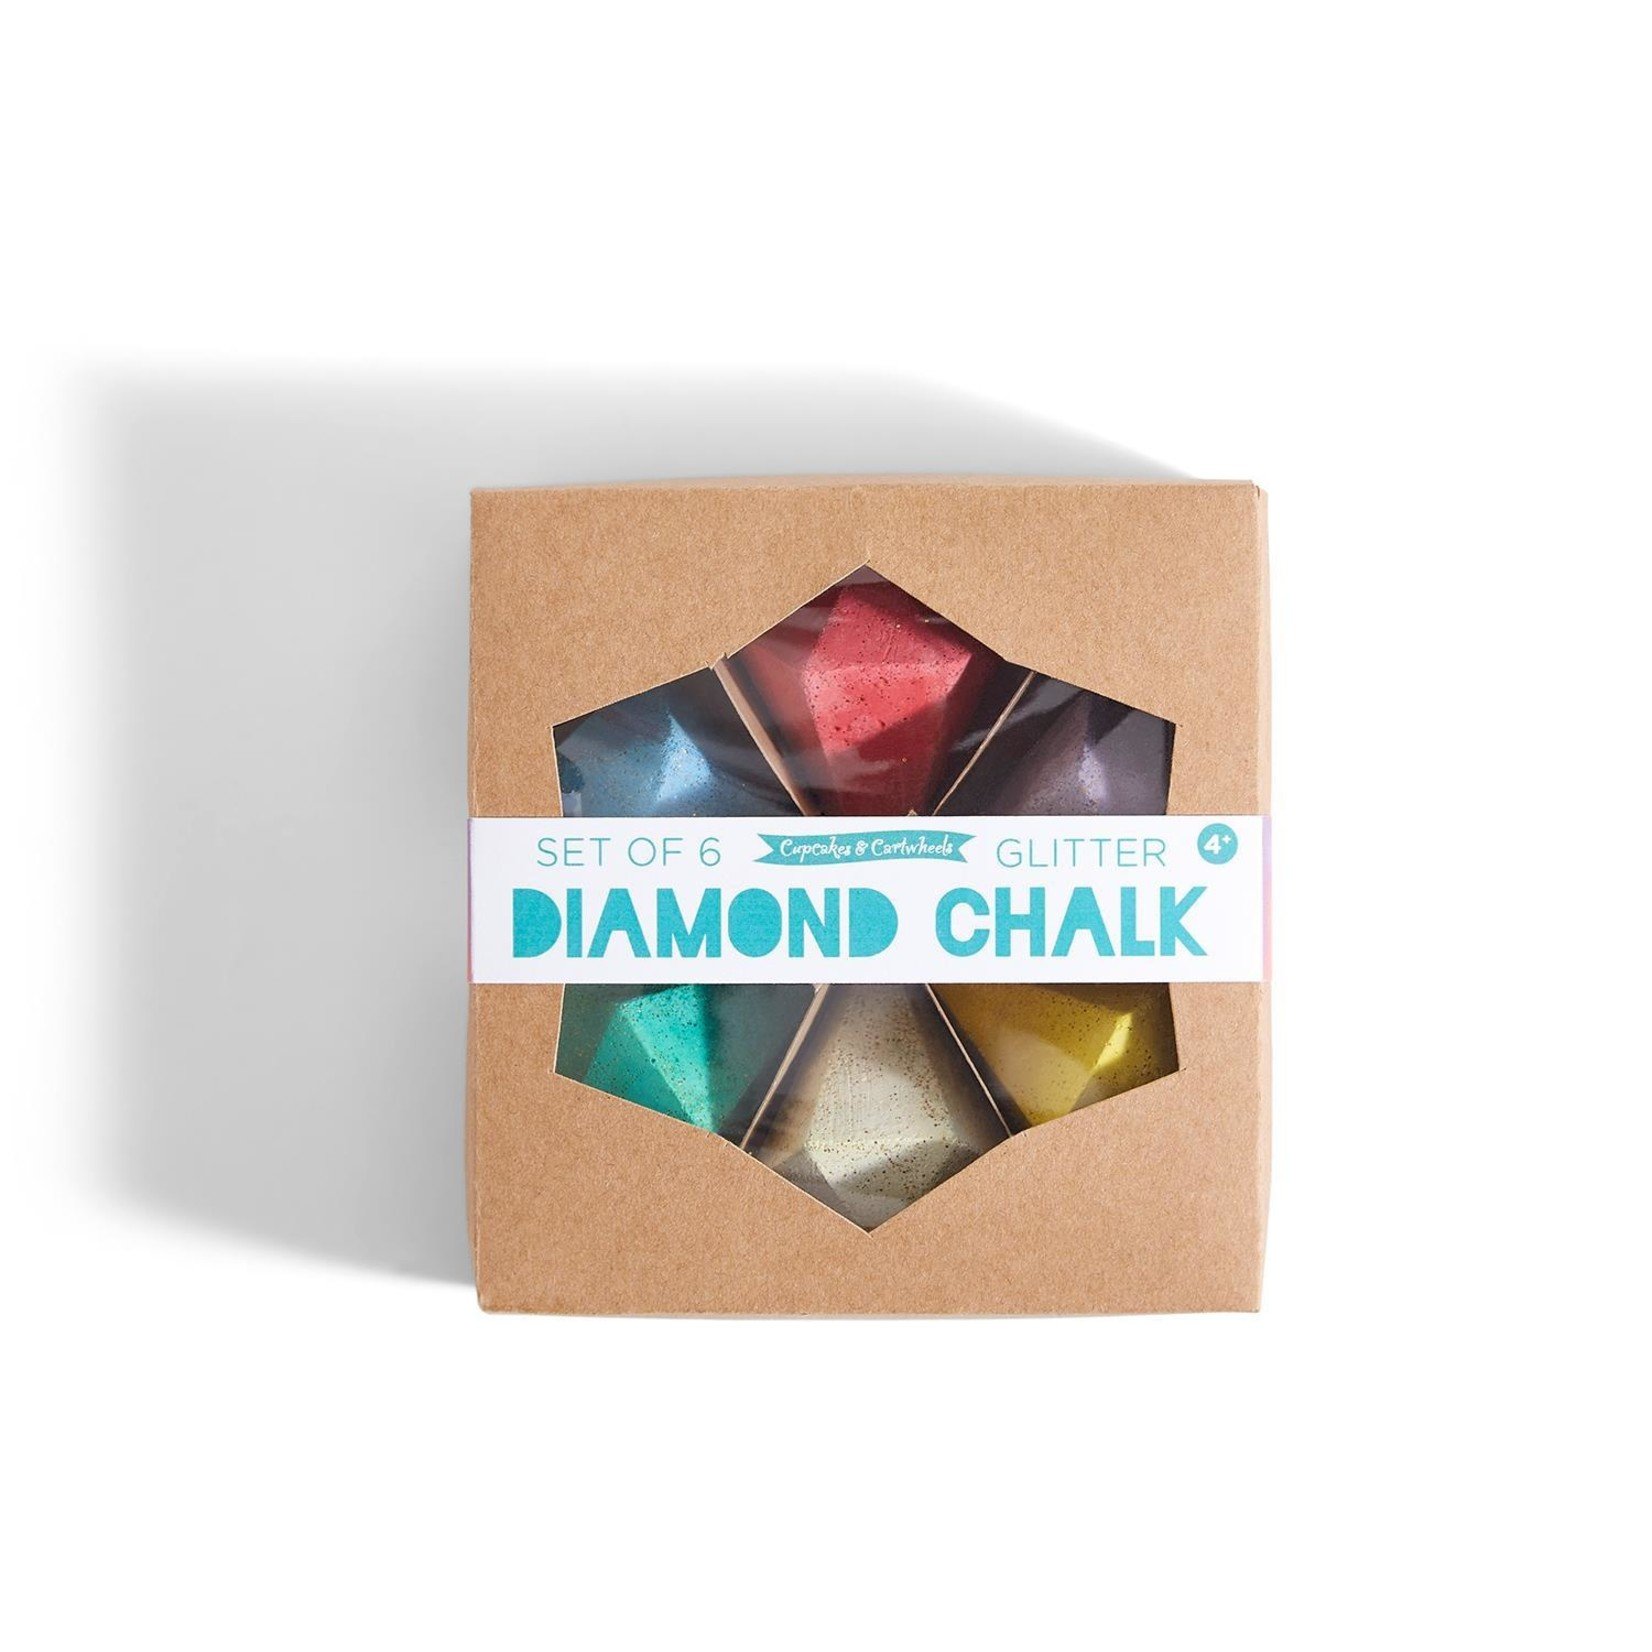 Two's Company, Inc. Diamond Chalk w/Glitter in Gift Box